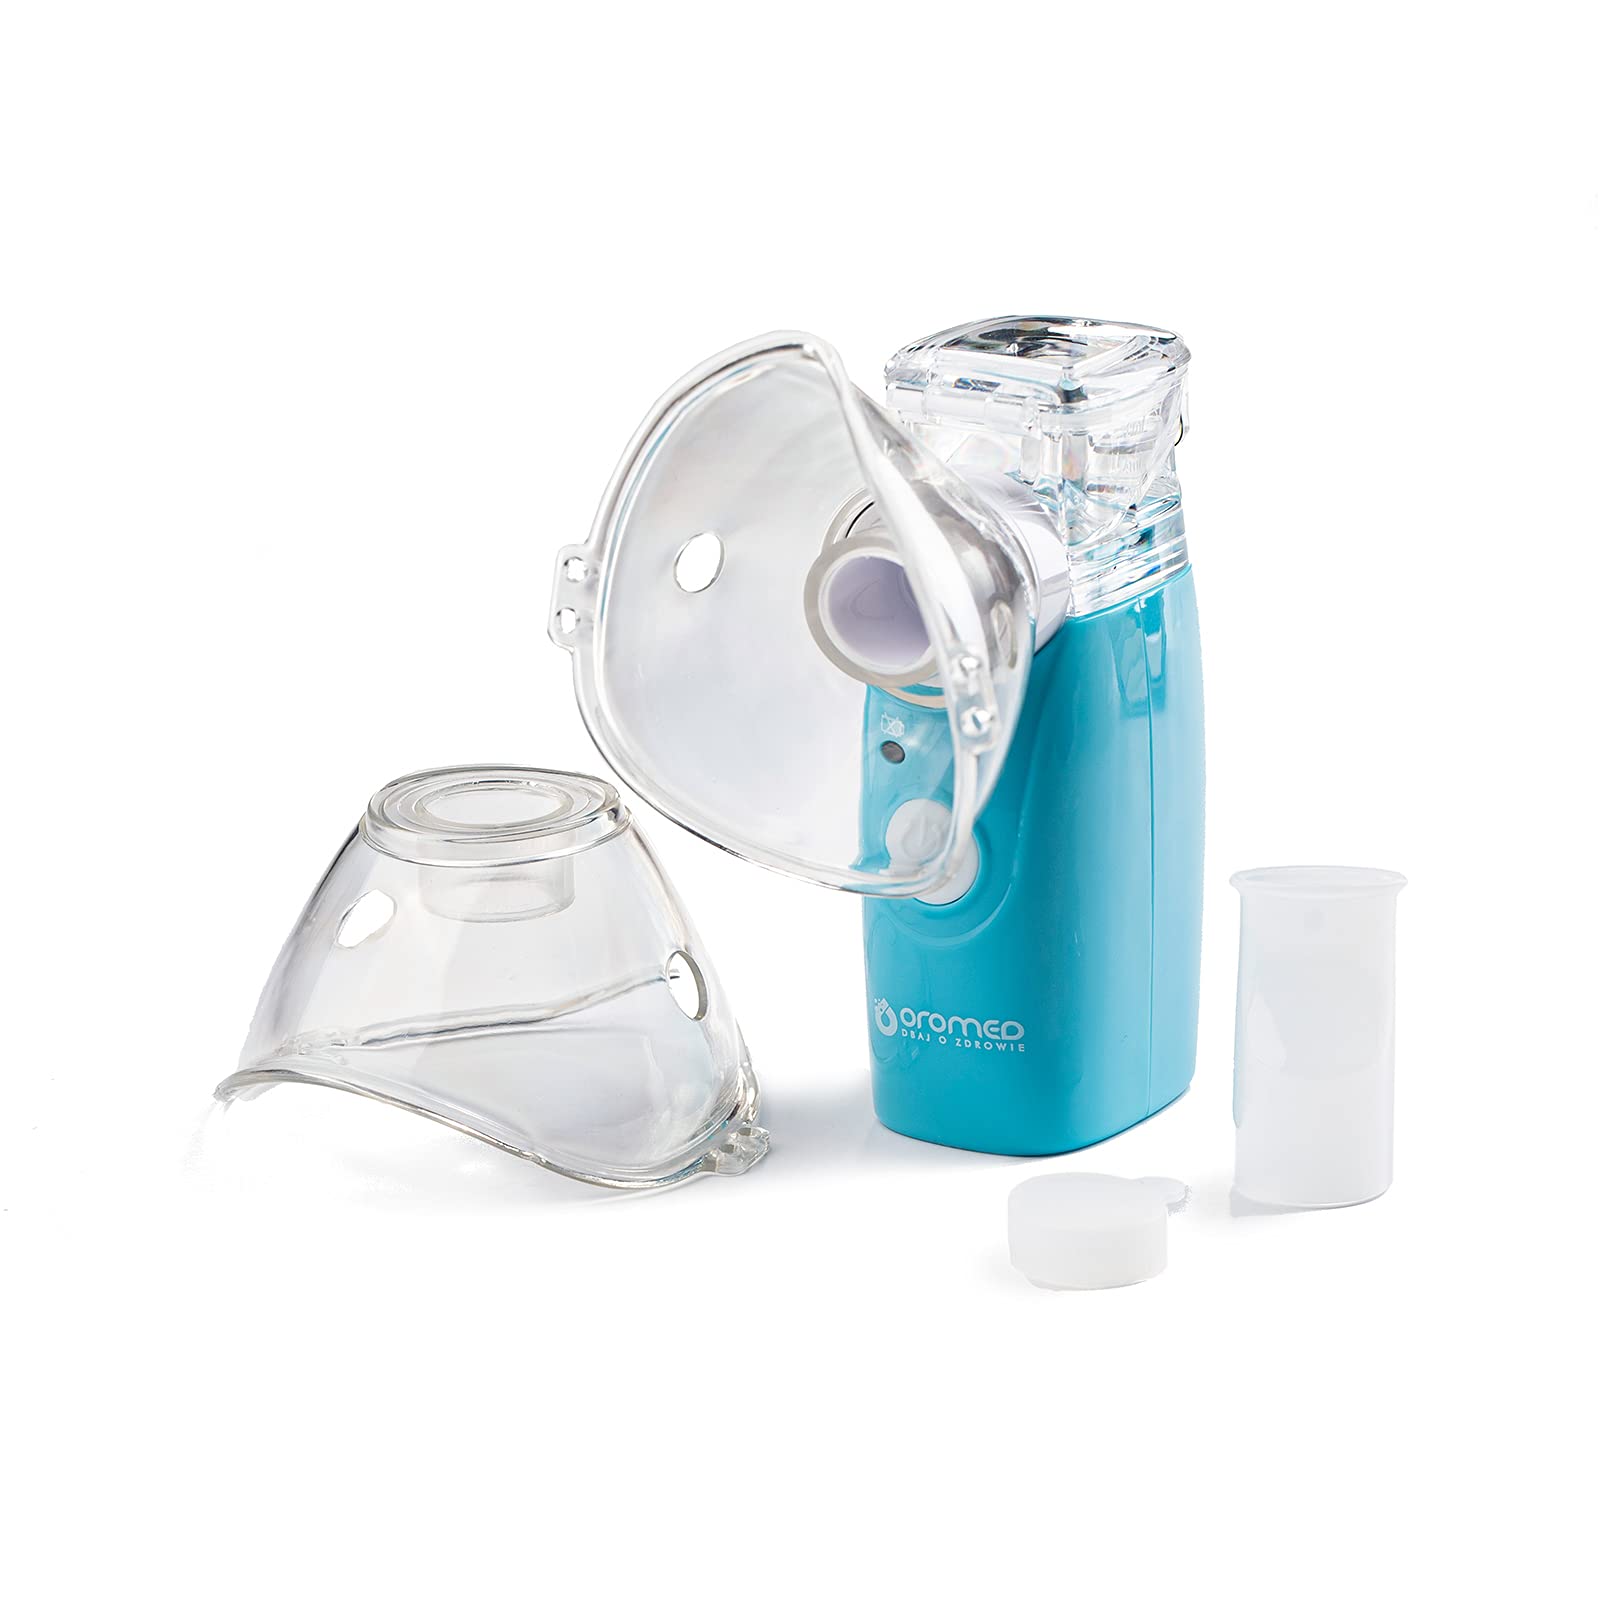 HI-TECH Medical ORO-MESH Inhaler Steam Inhaler